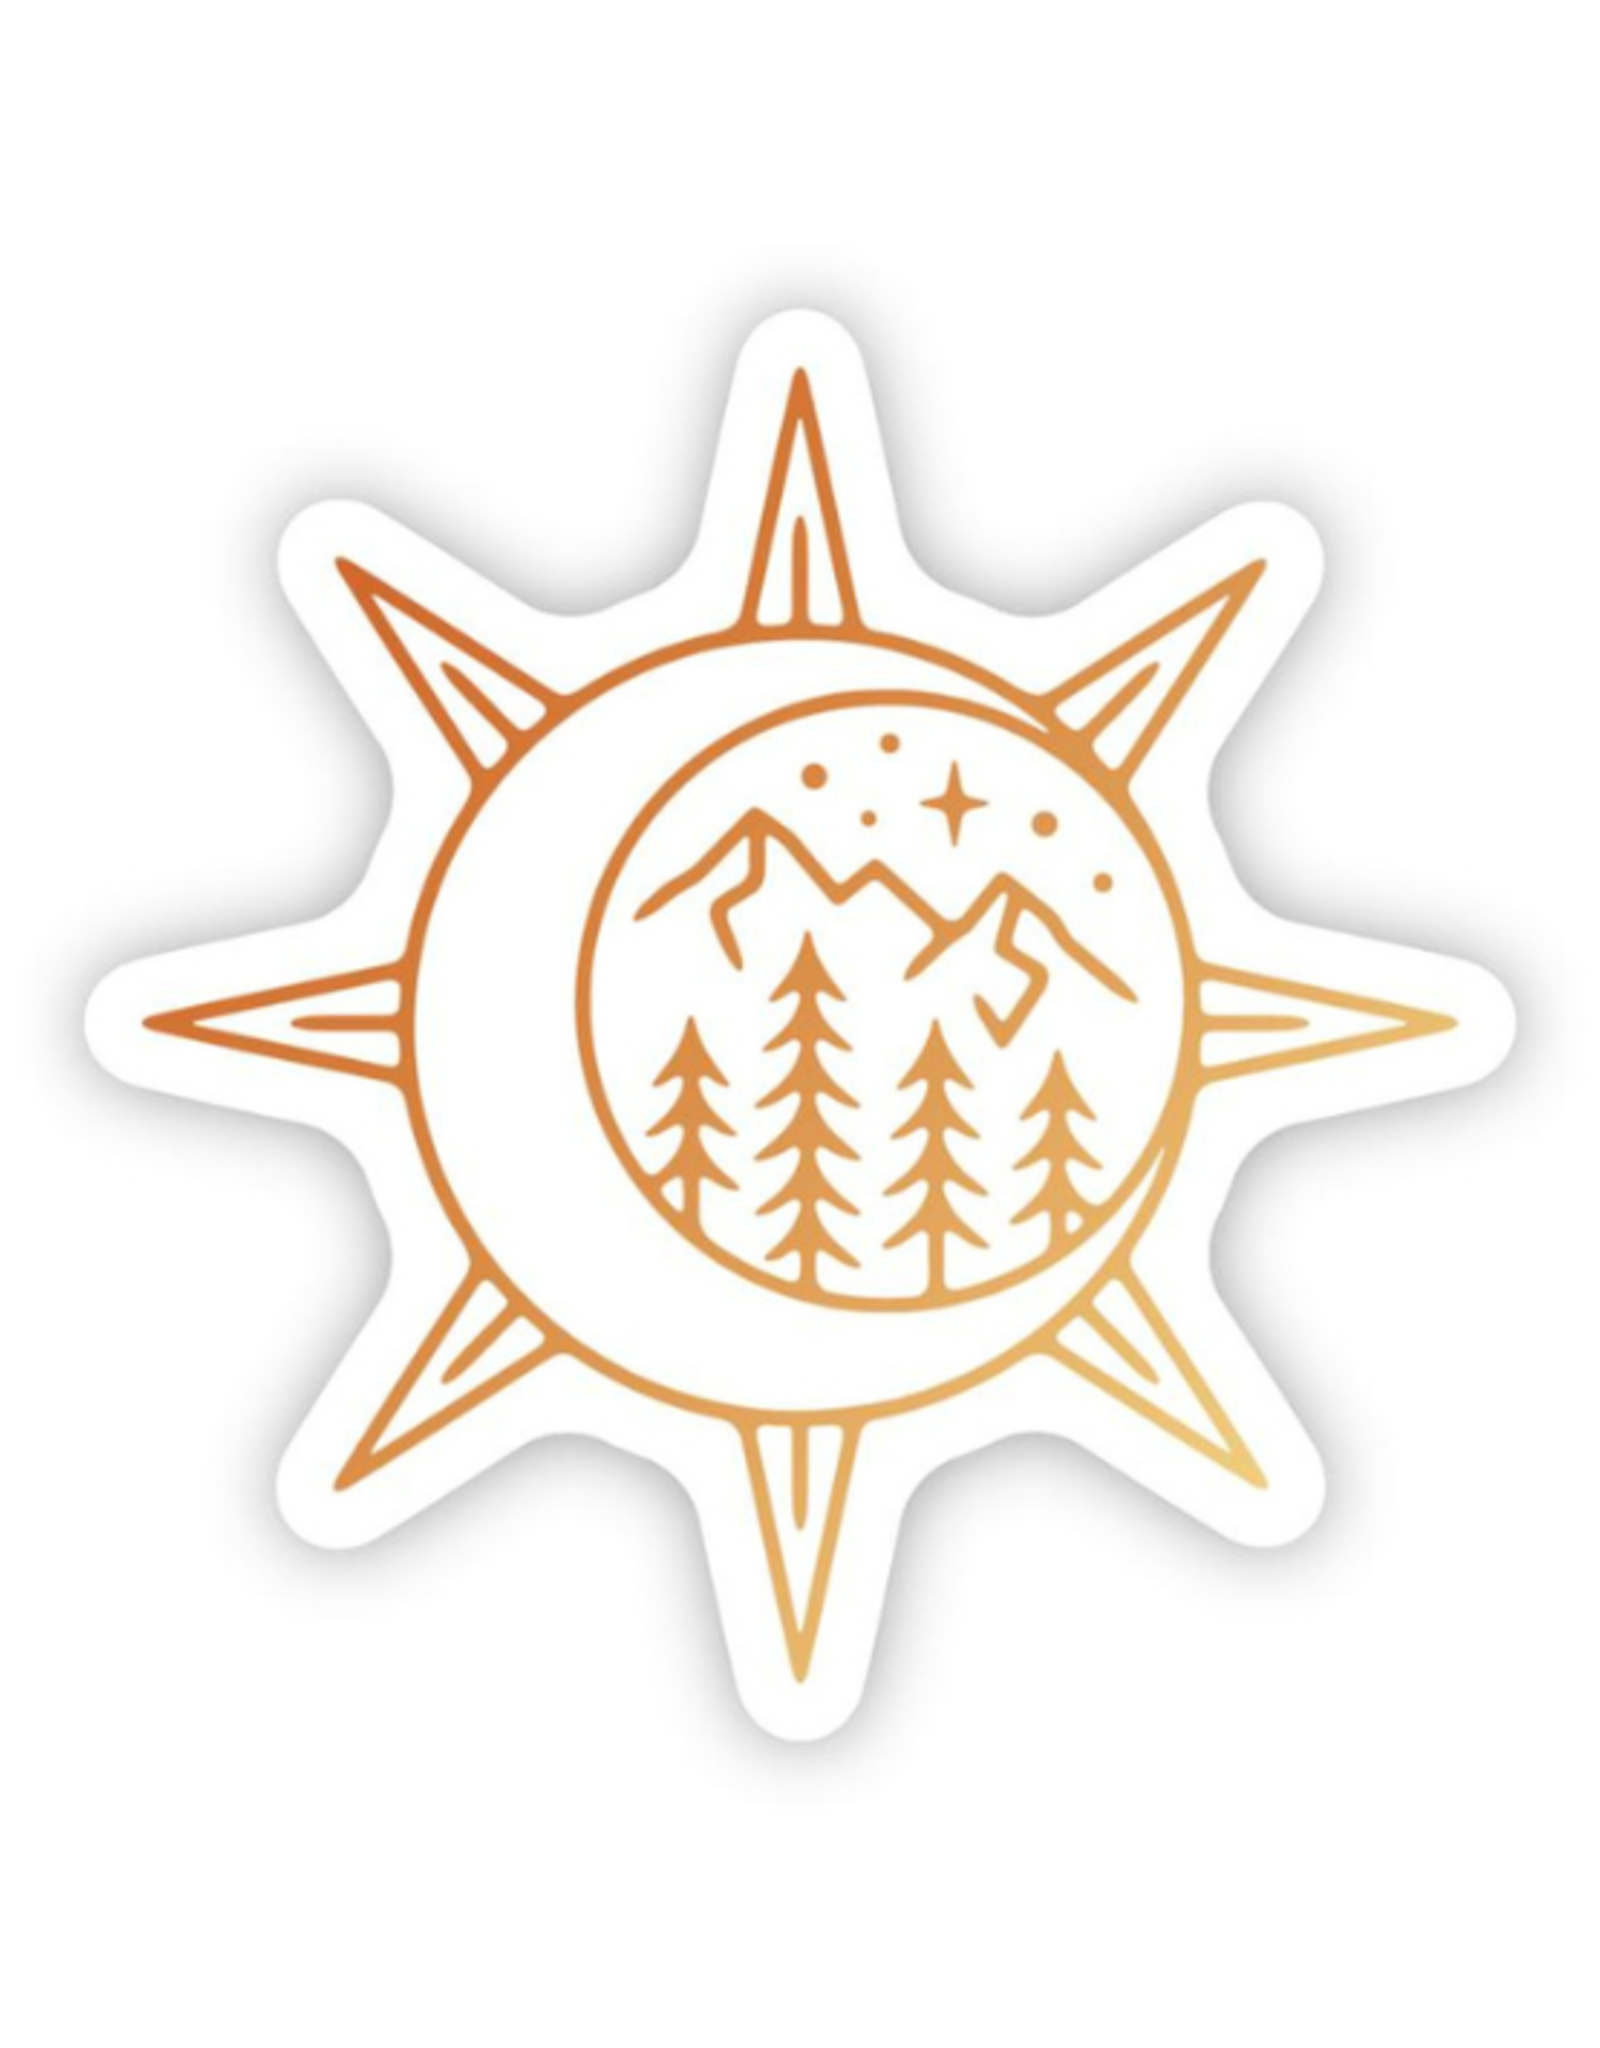 Stickers Northwest Inc. Stickers Northwest Inc. - Sun and Moon Scene Sticker